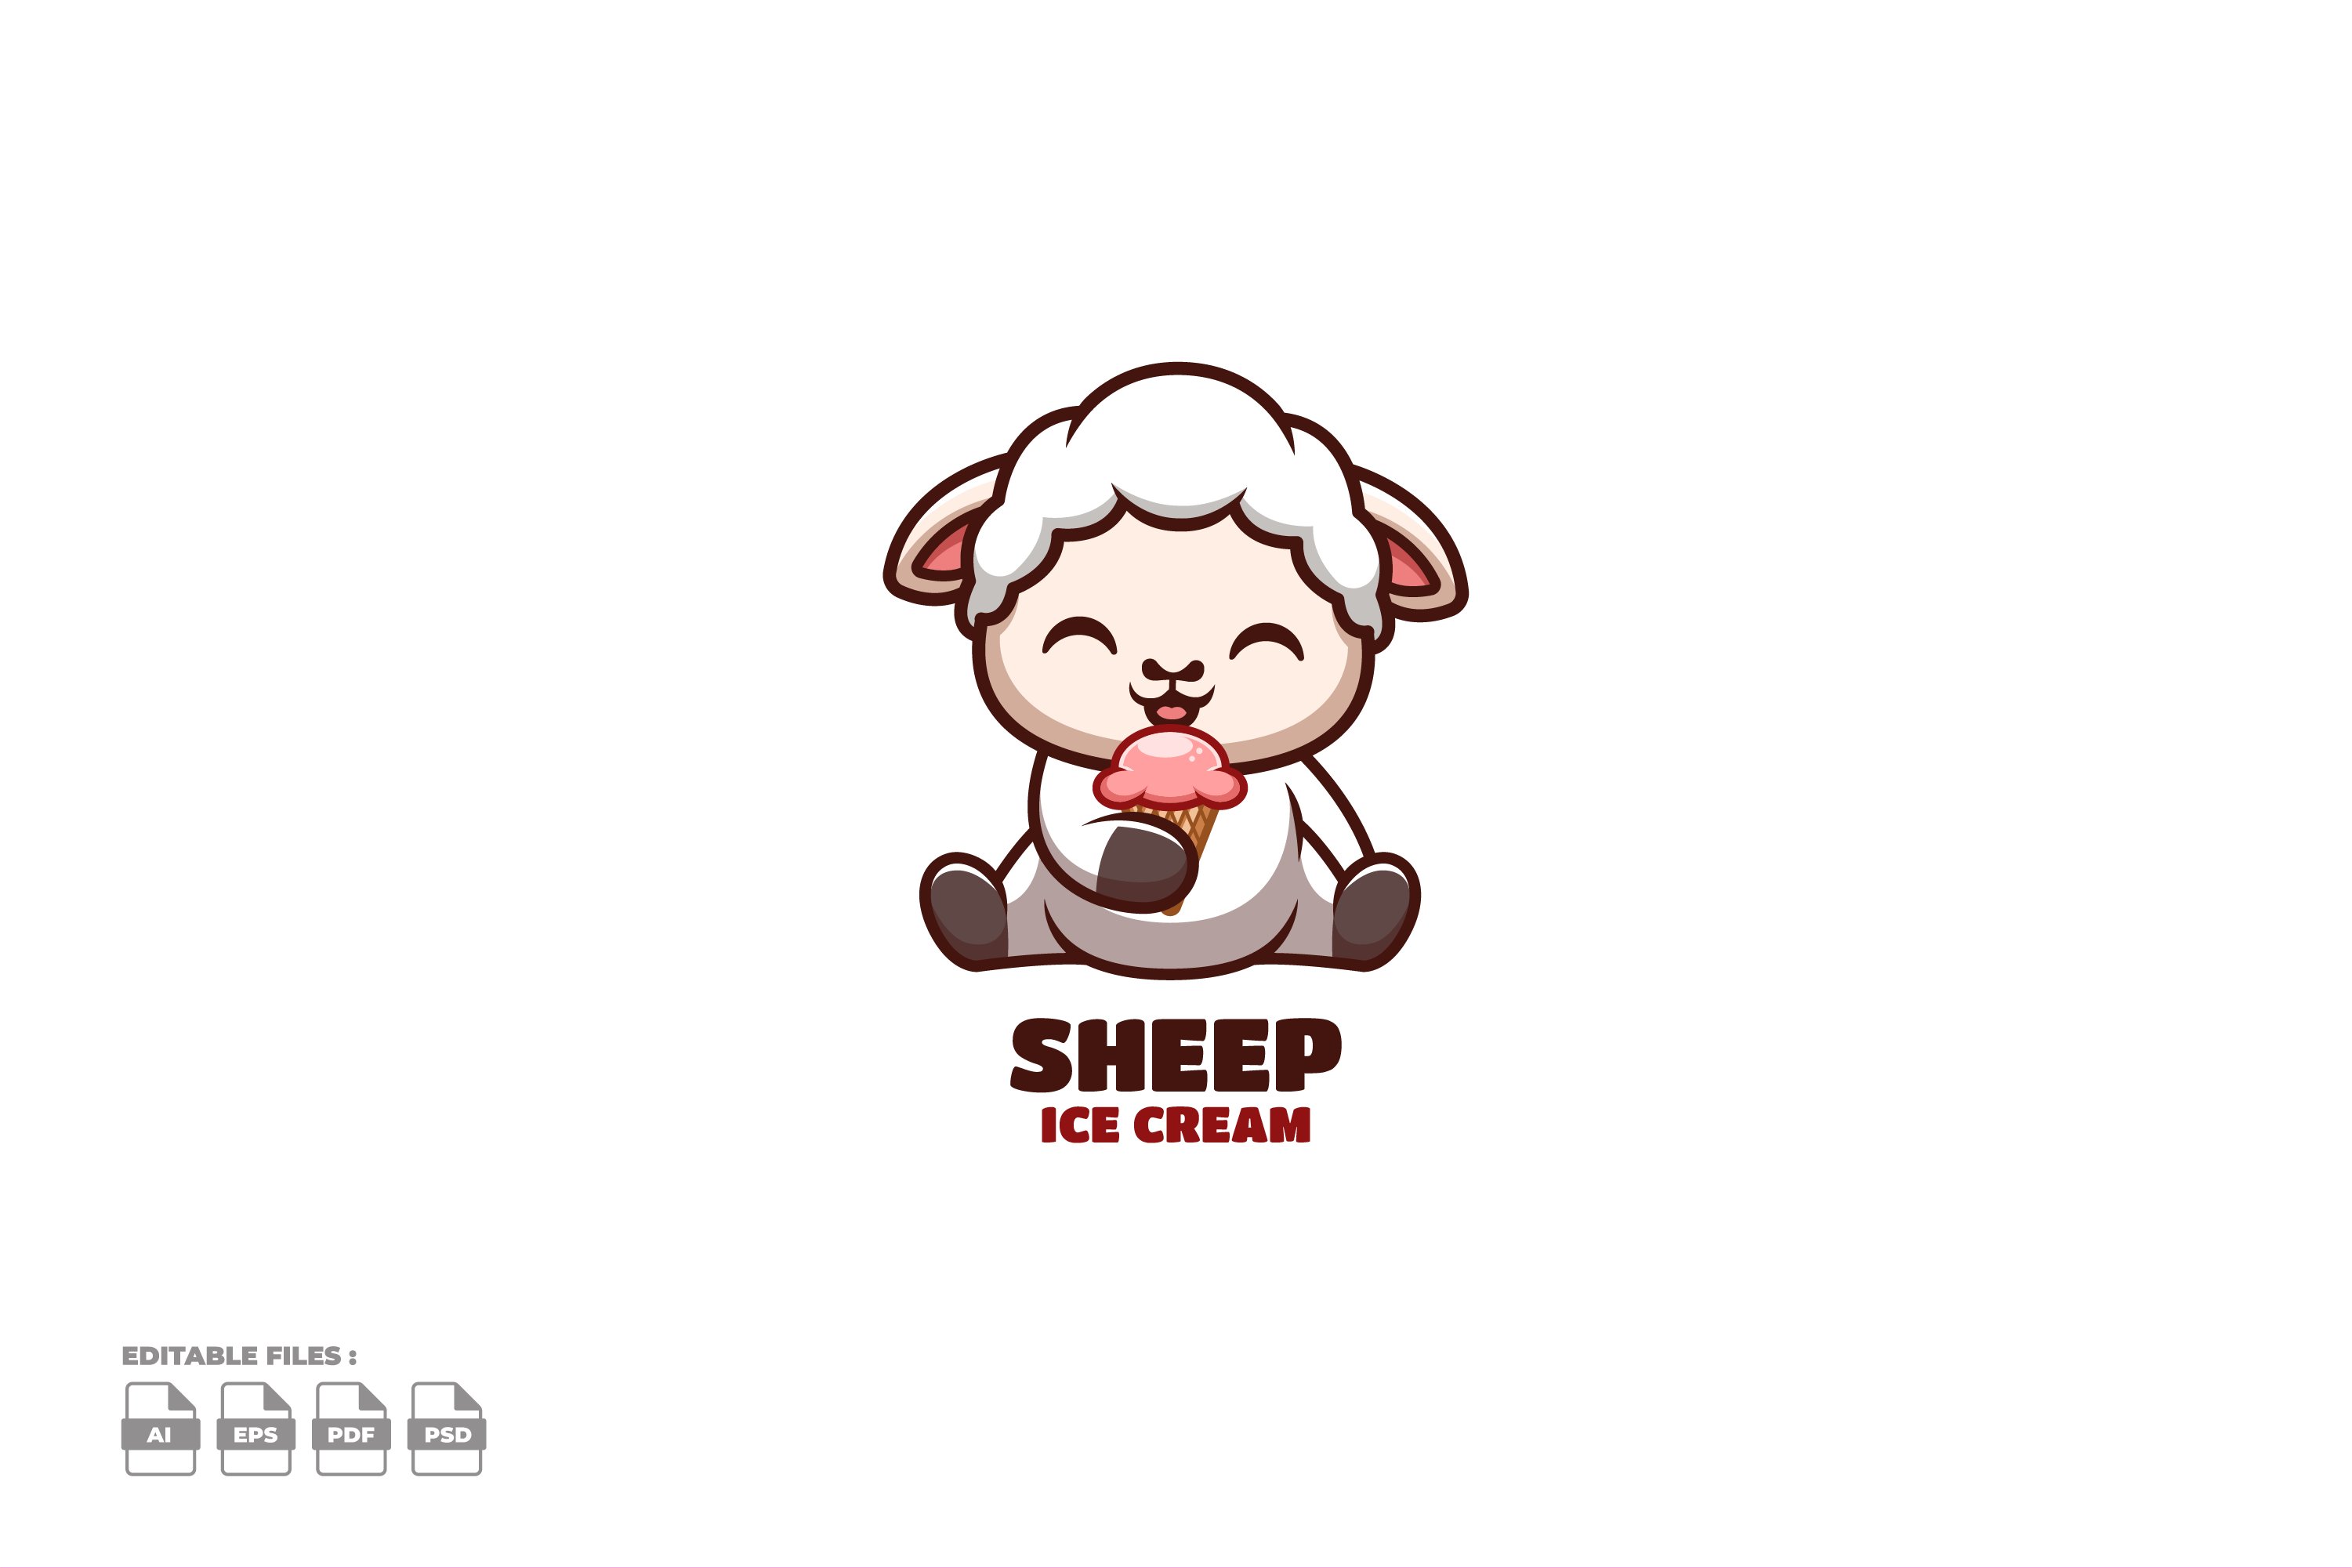 Ice Cream Sheep Cute Mascot Logo cover image.